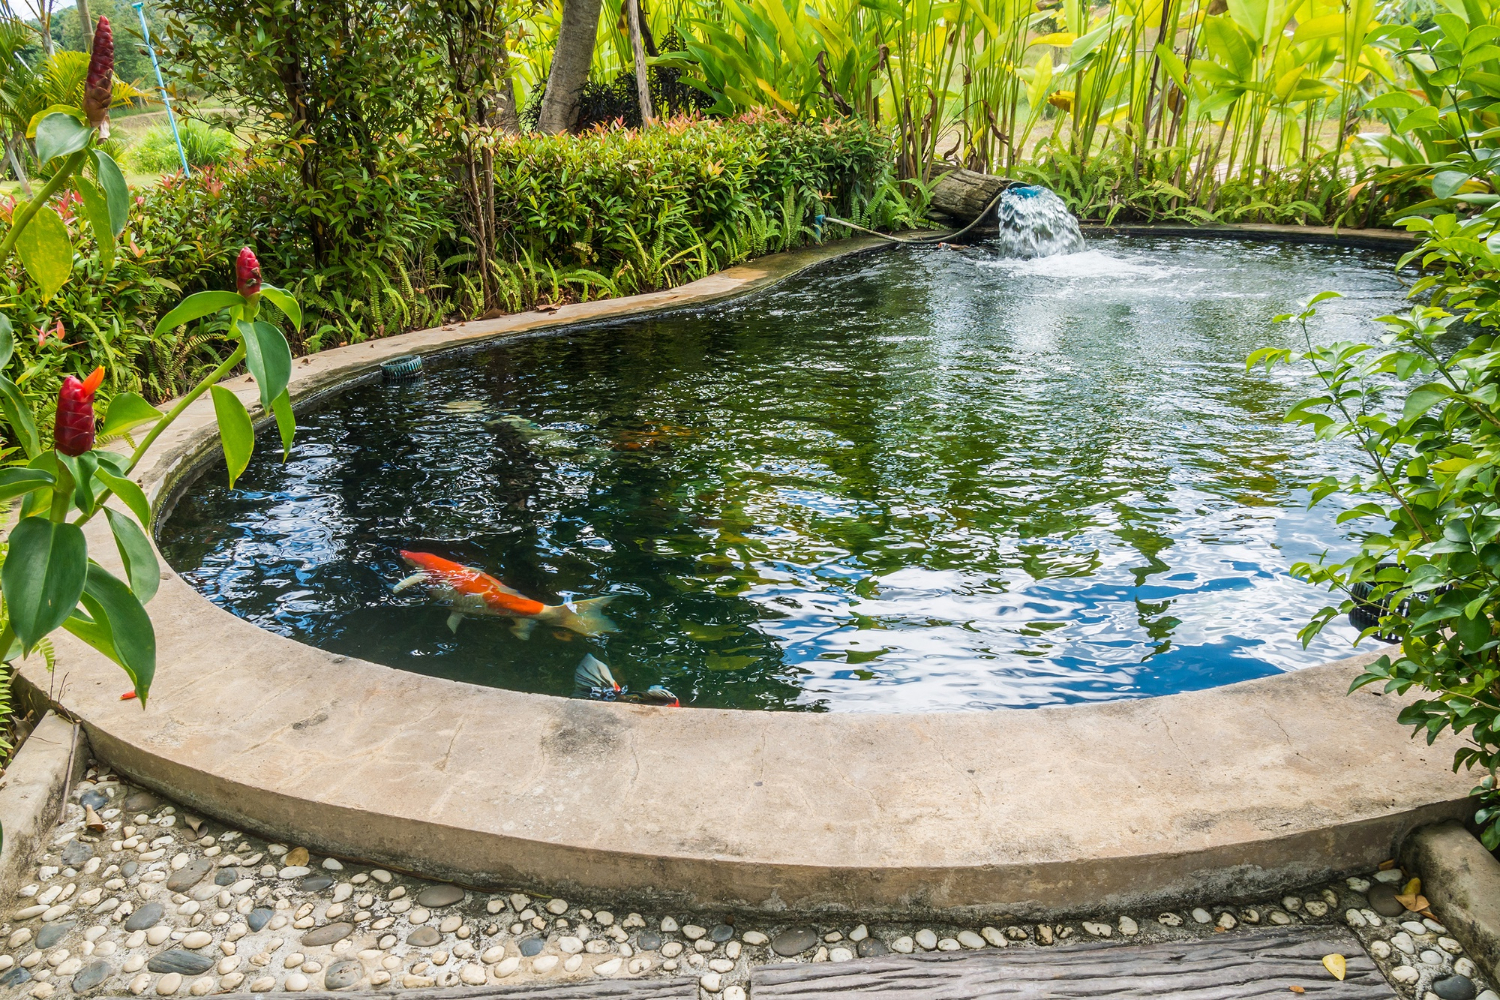 Menata taman depan rumah sederhana dengan membuat kolam ikan kecil.